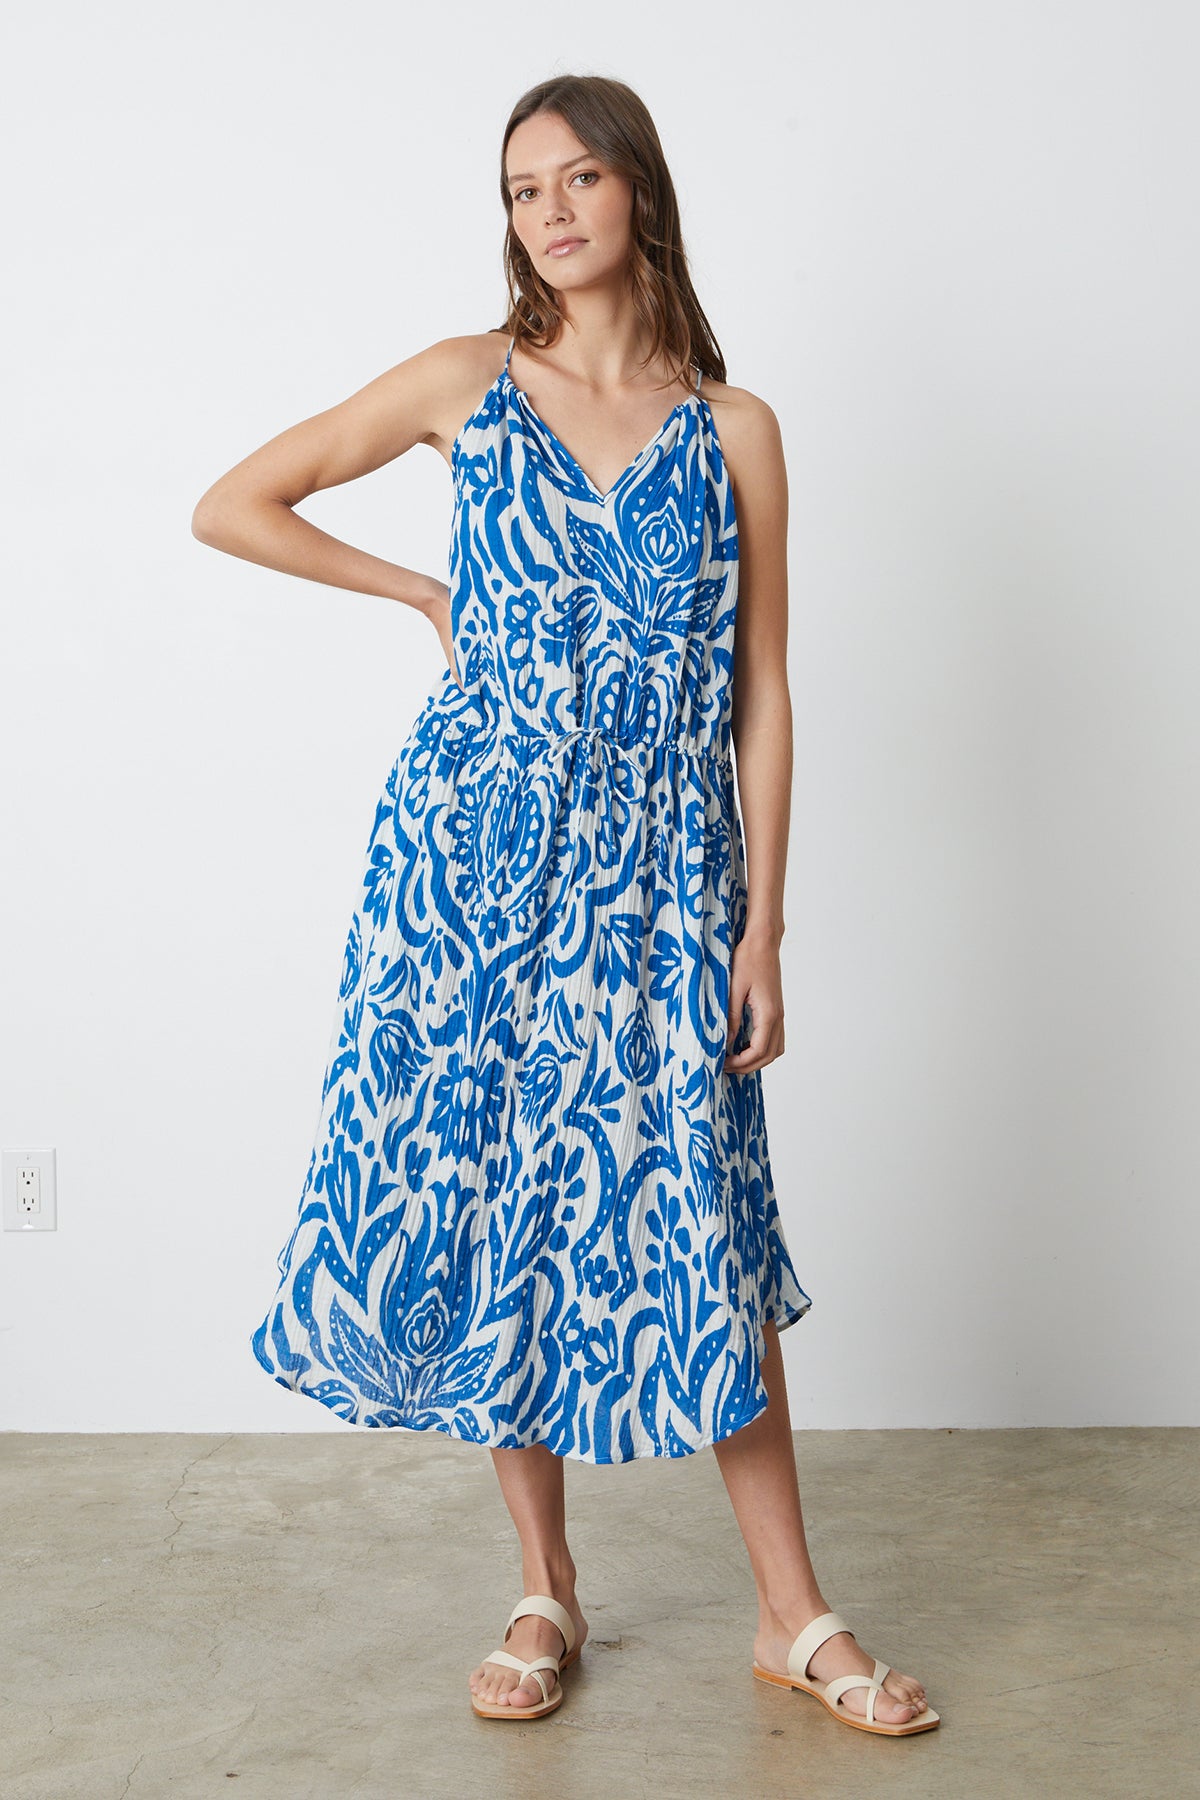 a model wearing a Velvet by Graham & Spencer Sasha Printed Cotton Gauze Dress.-26342720995521